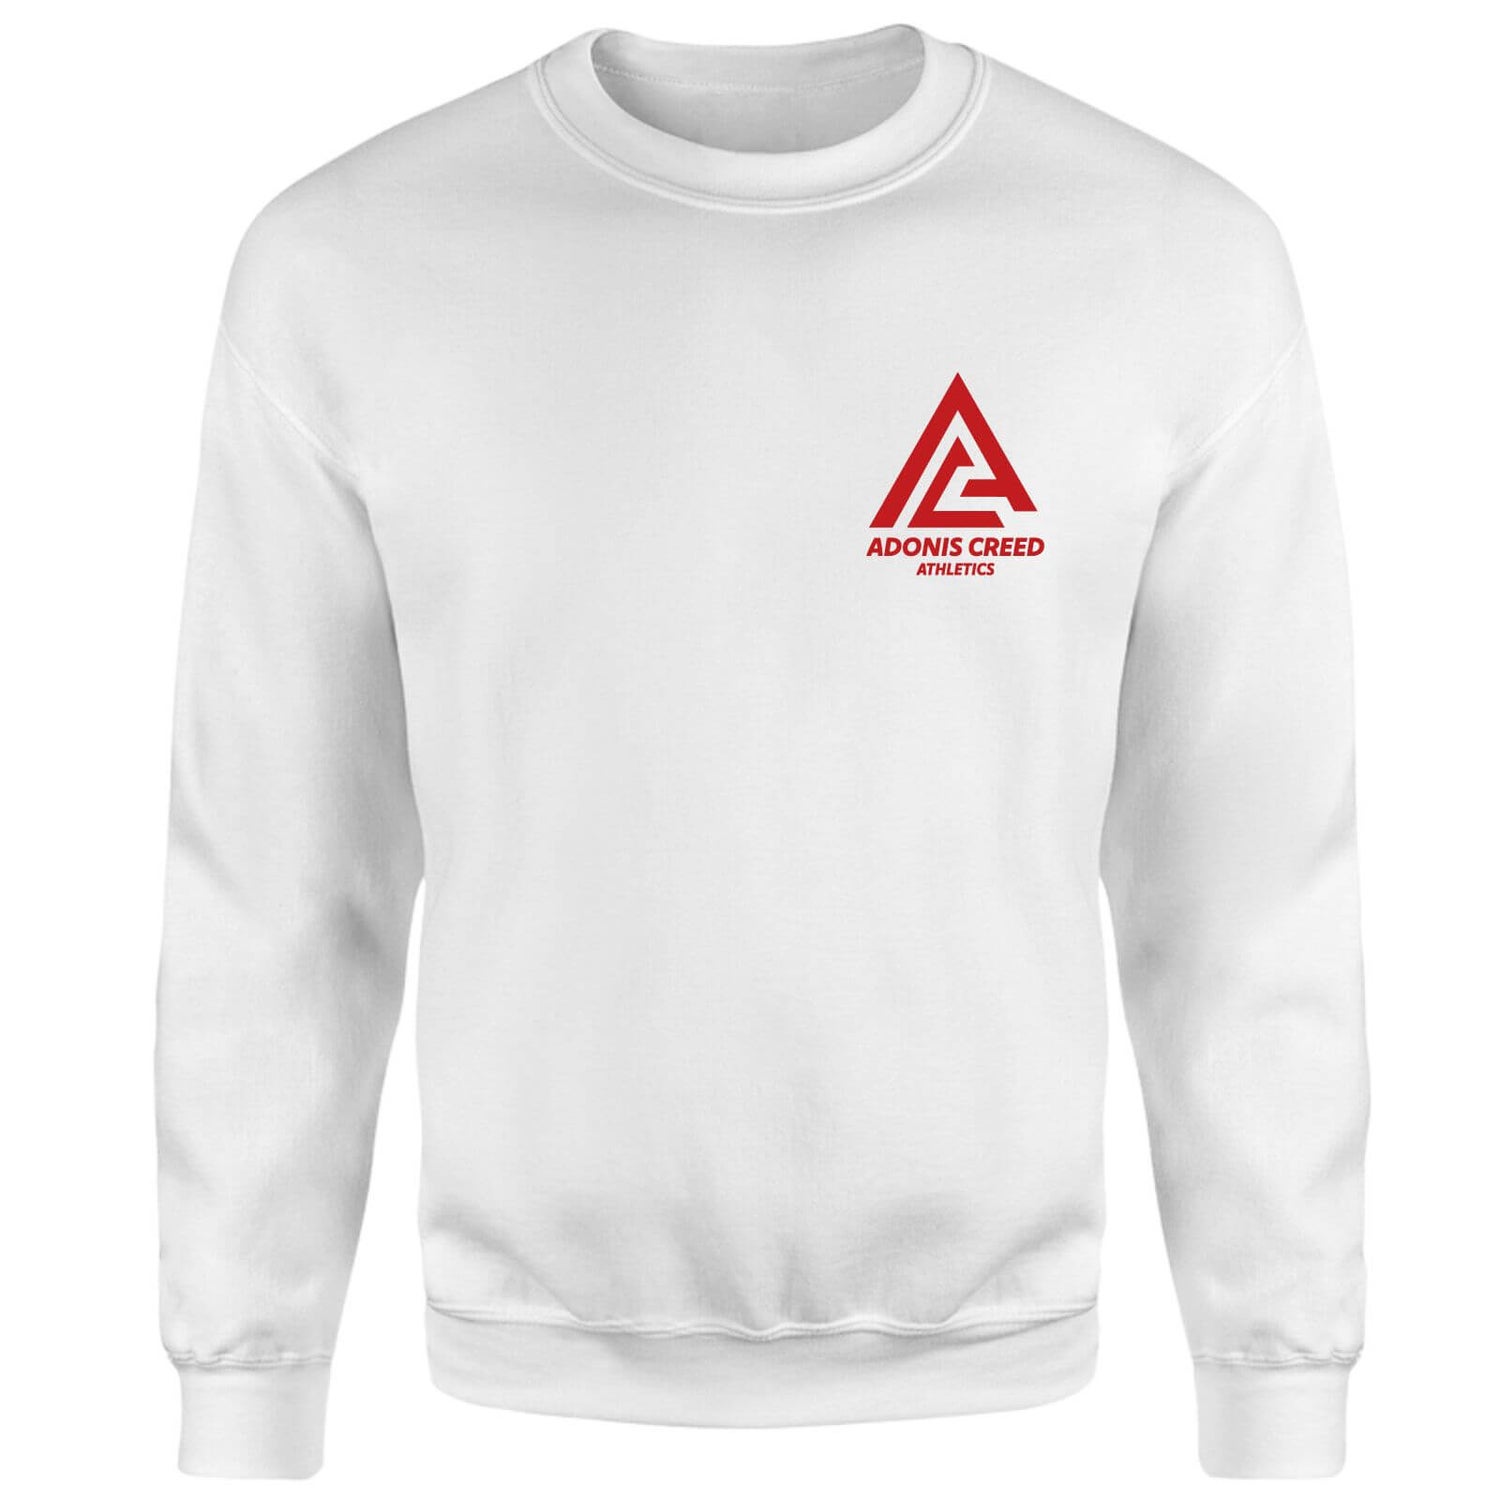 Creed Adonis Creed Athletics Logo Sweatshirt - White